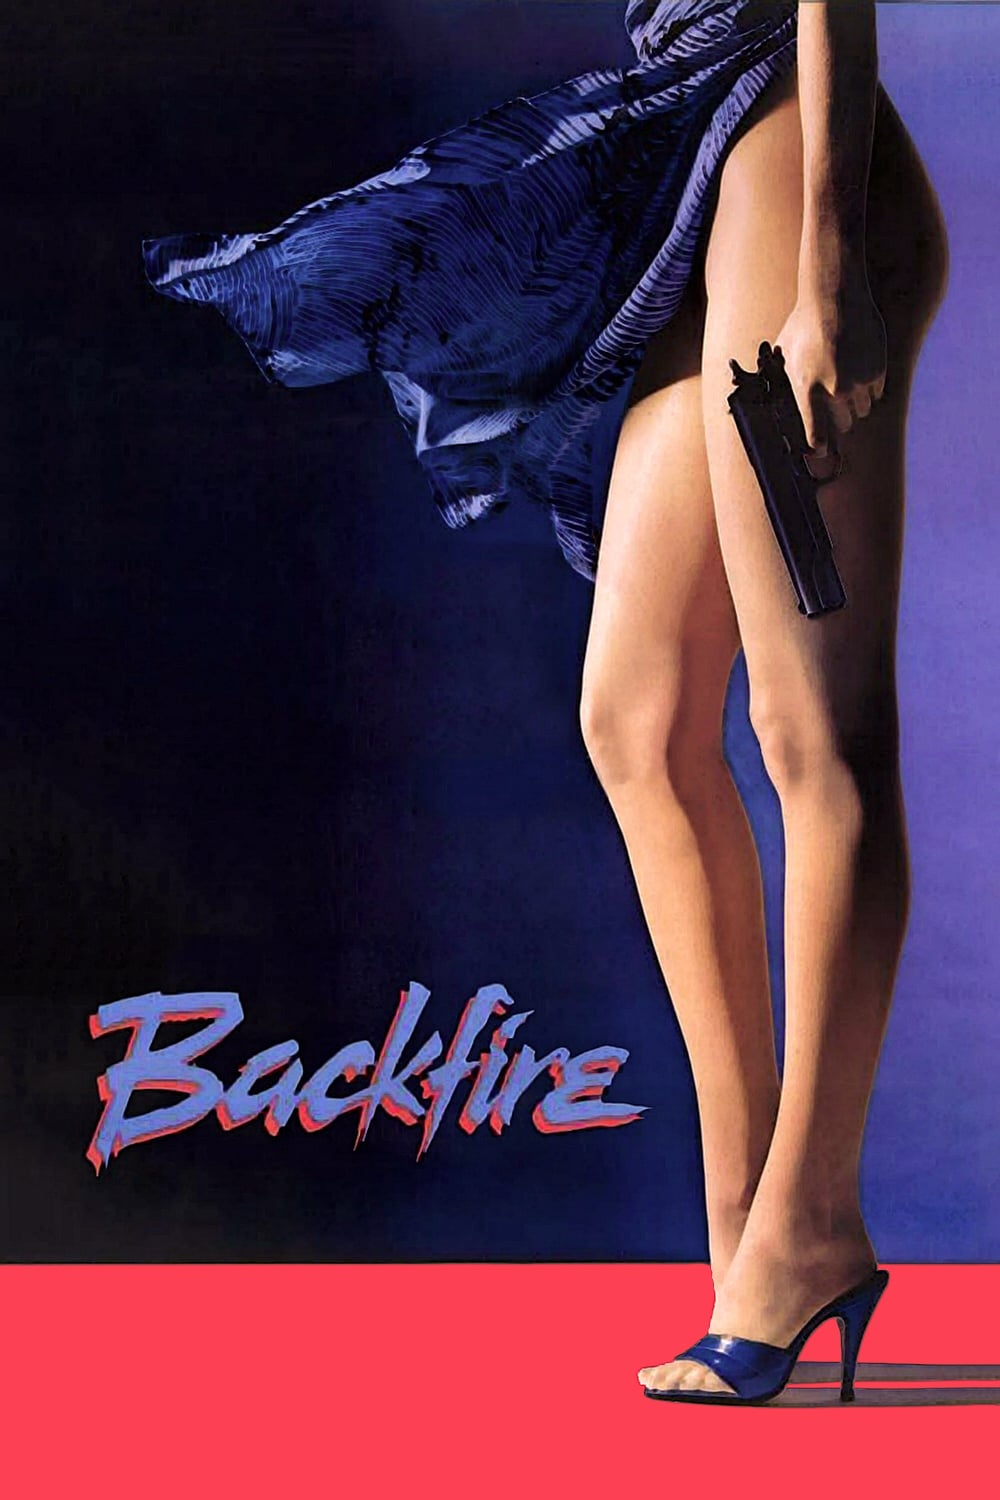 Backfire (1988)